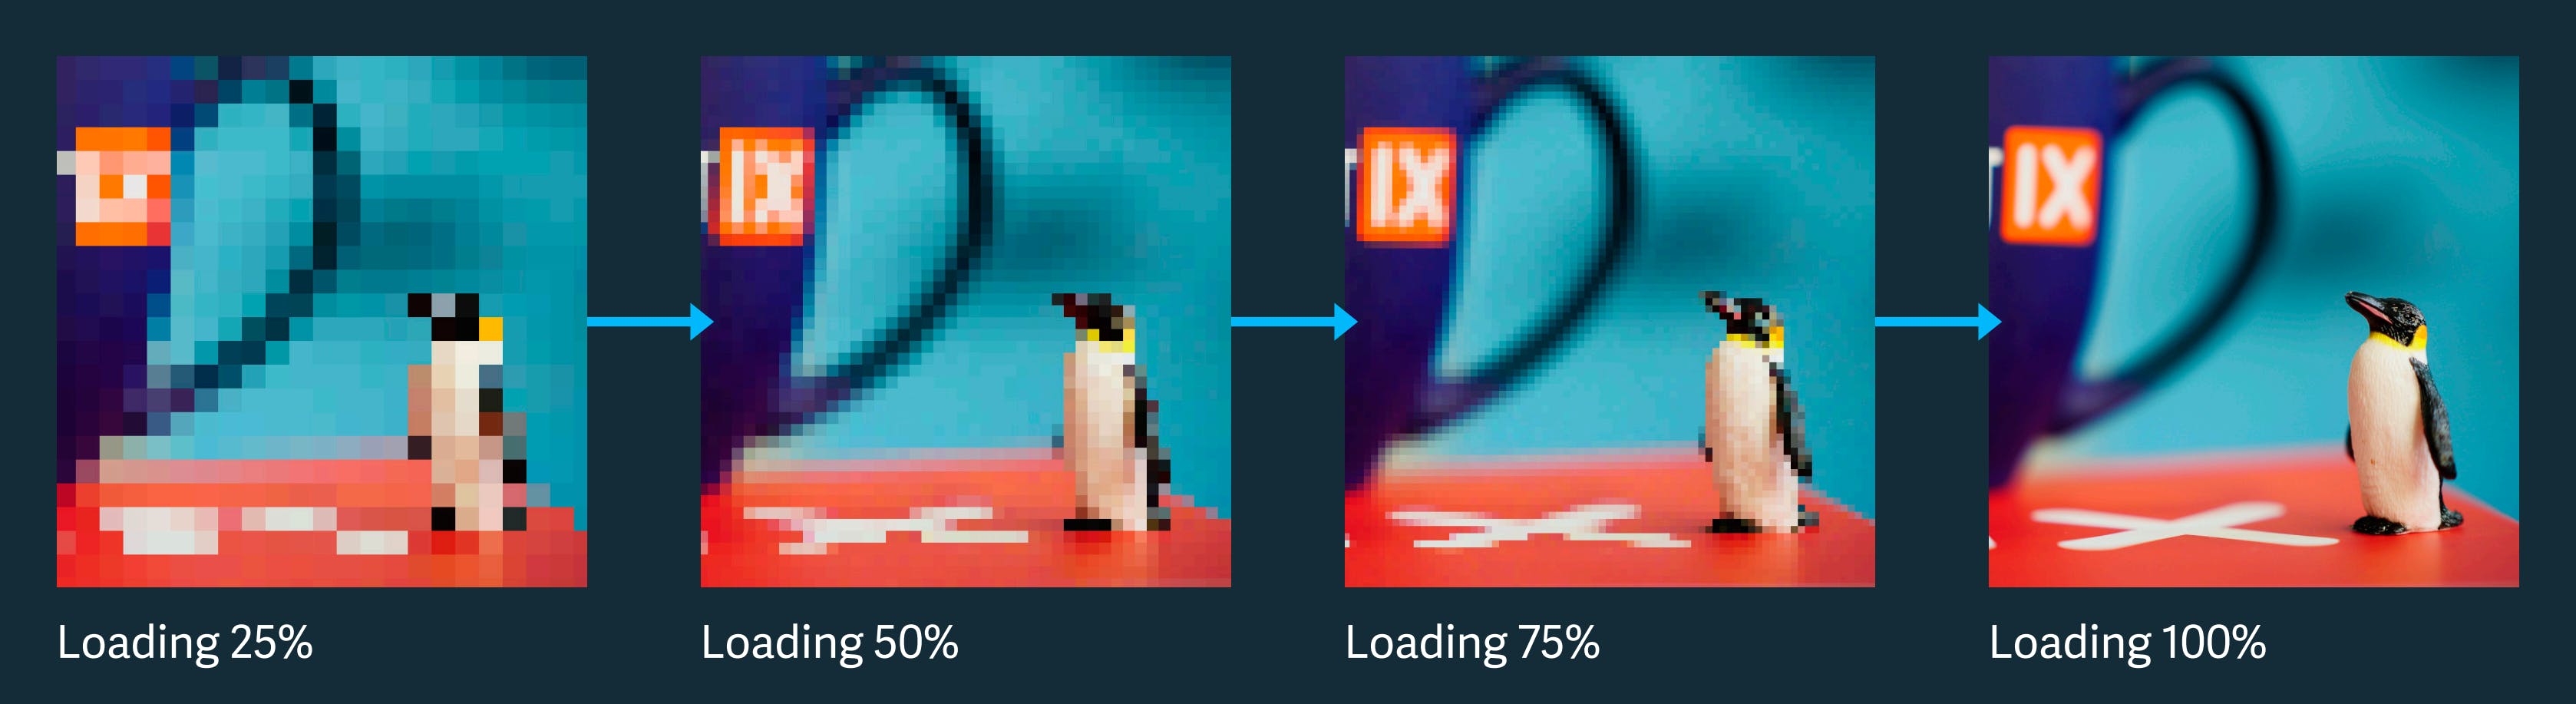 How an image loads using progressive mode